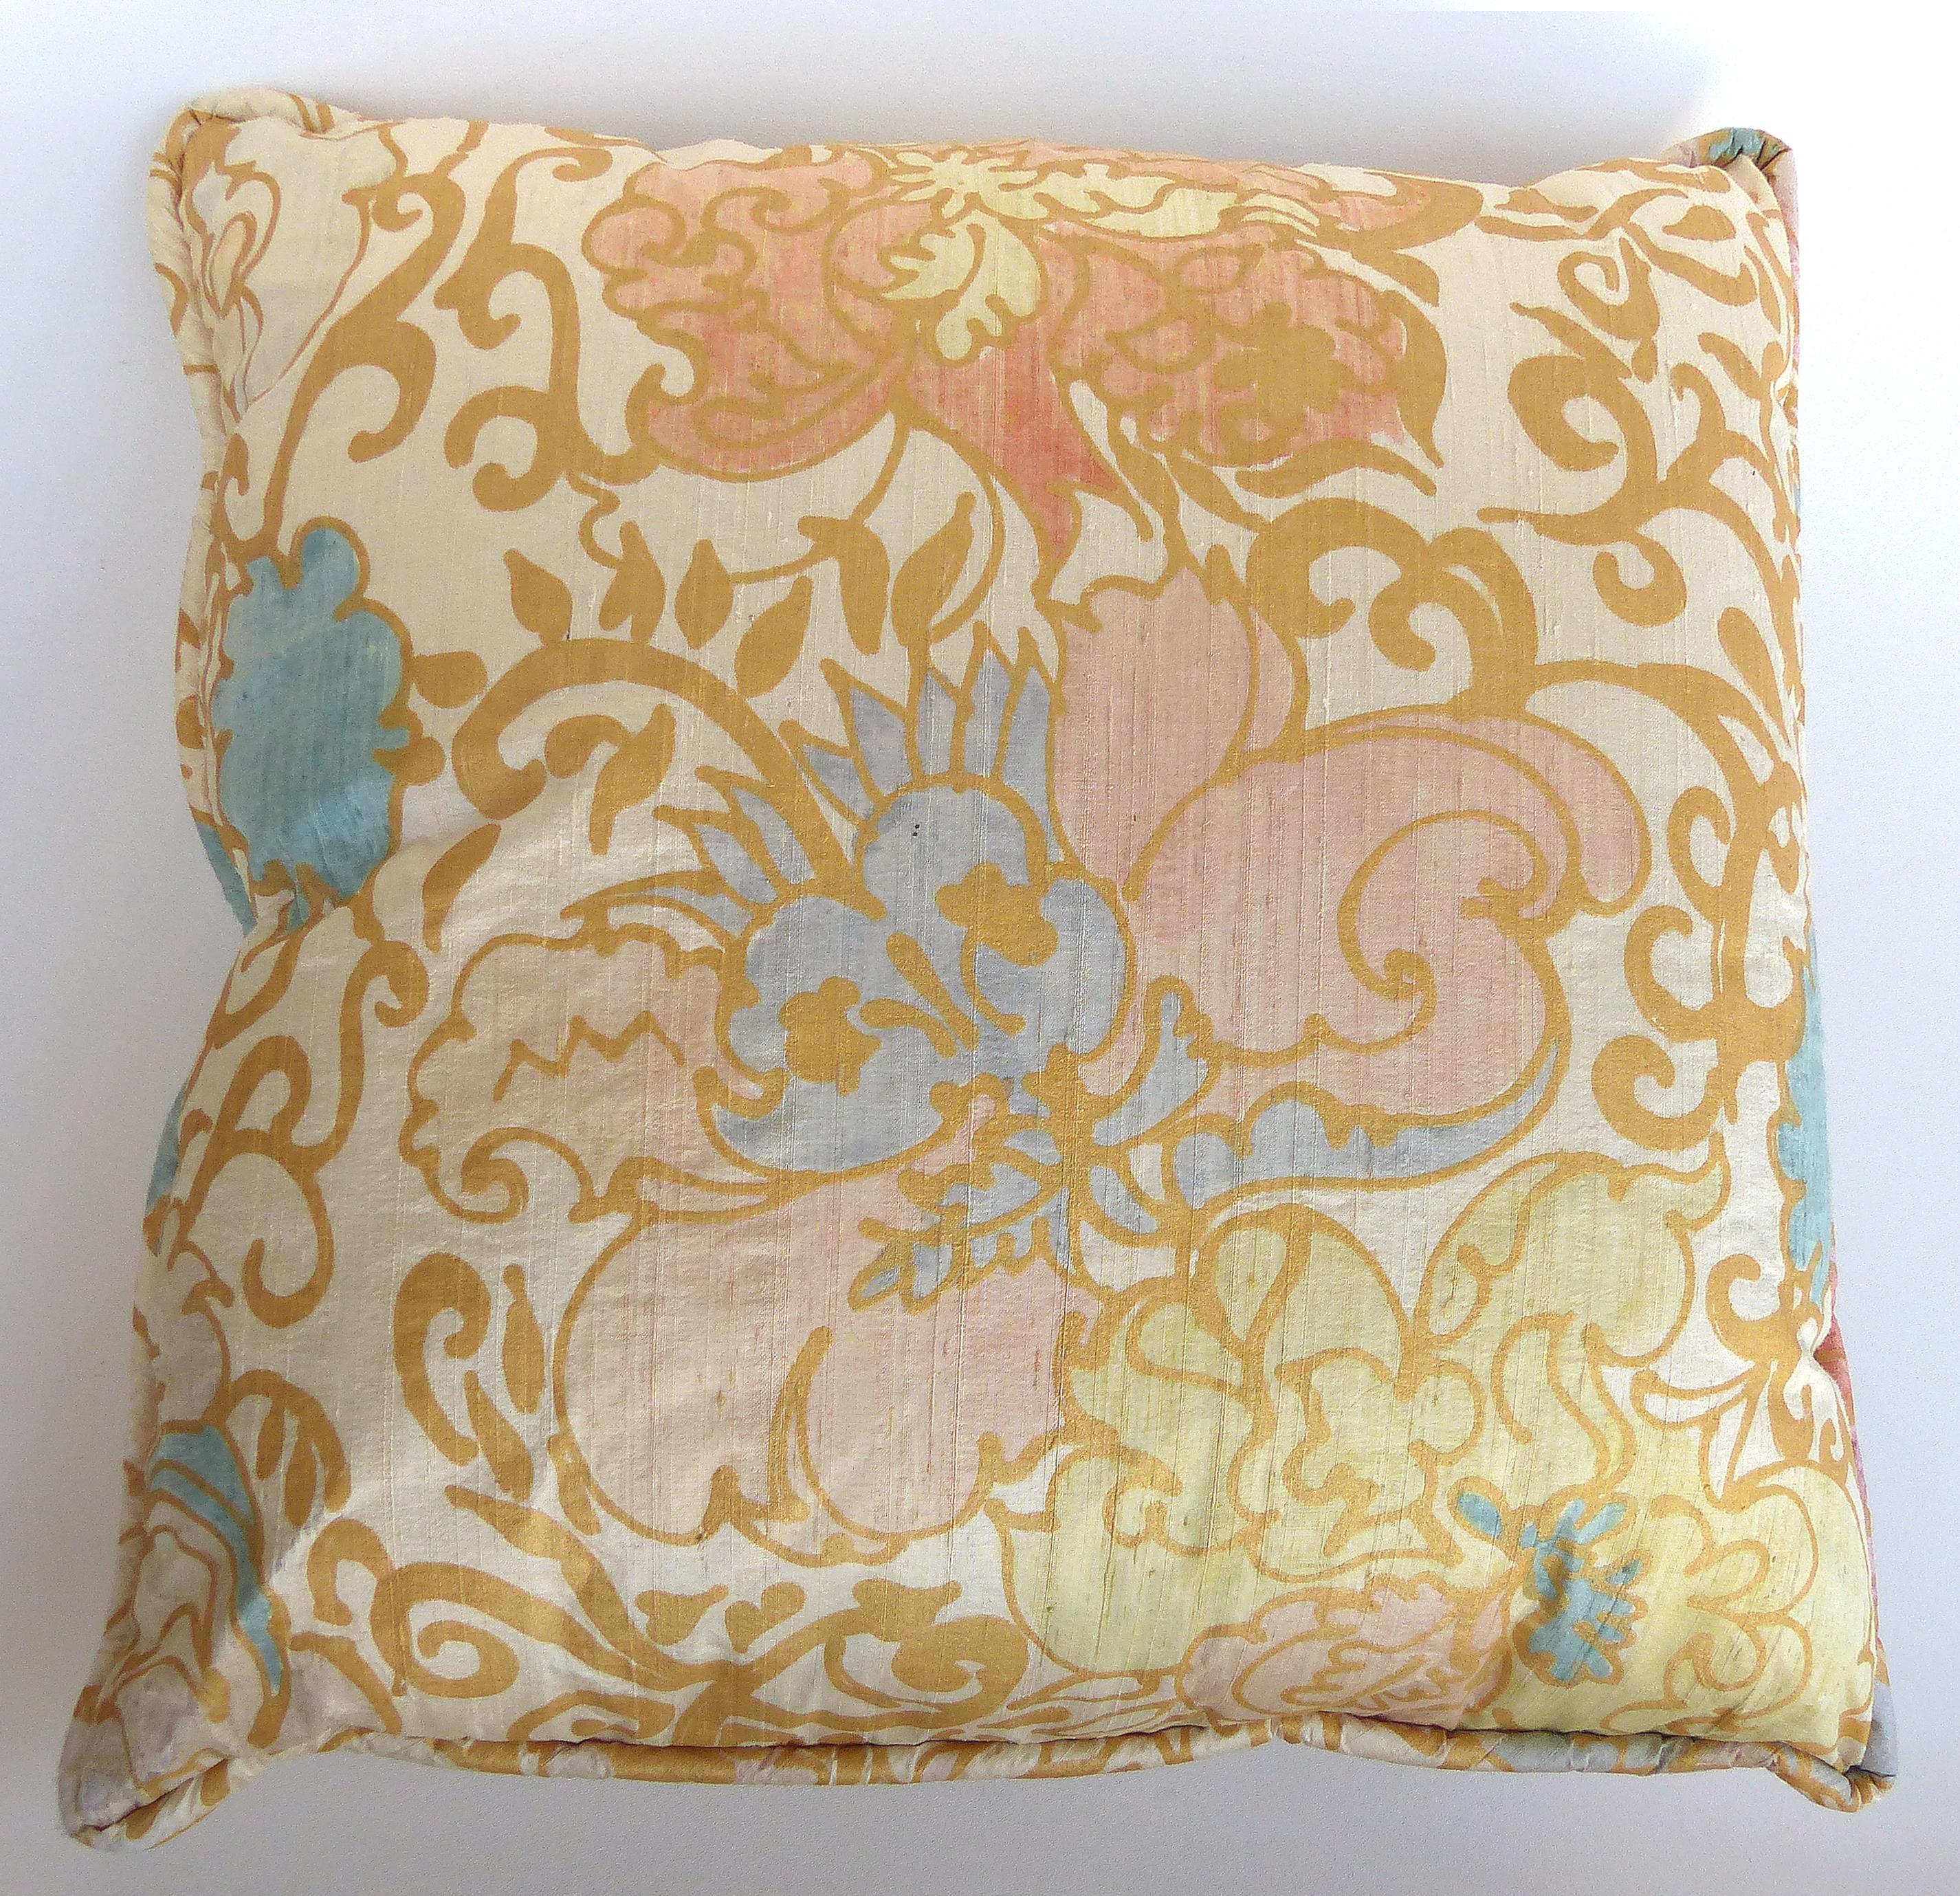 American Barbara Beckmann Hand-Printed Silk Pillows, Pairs Available